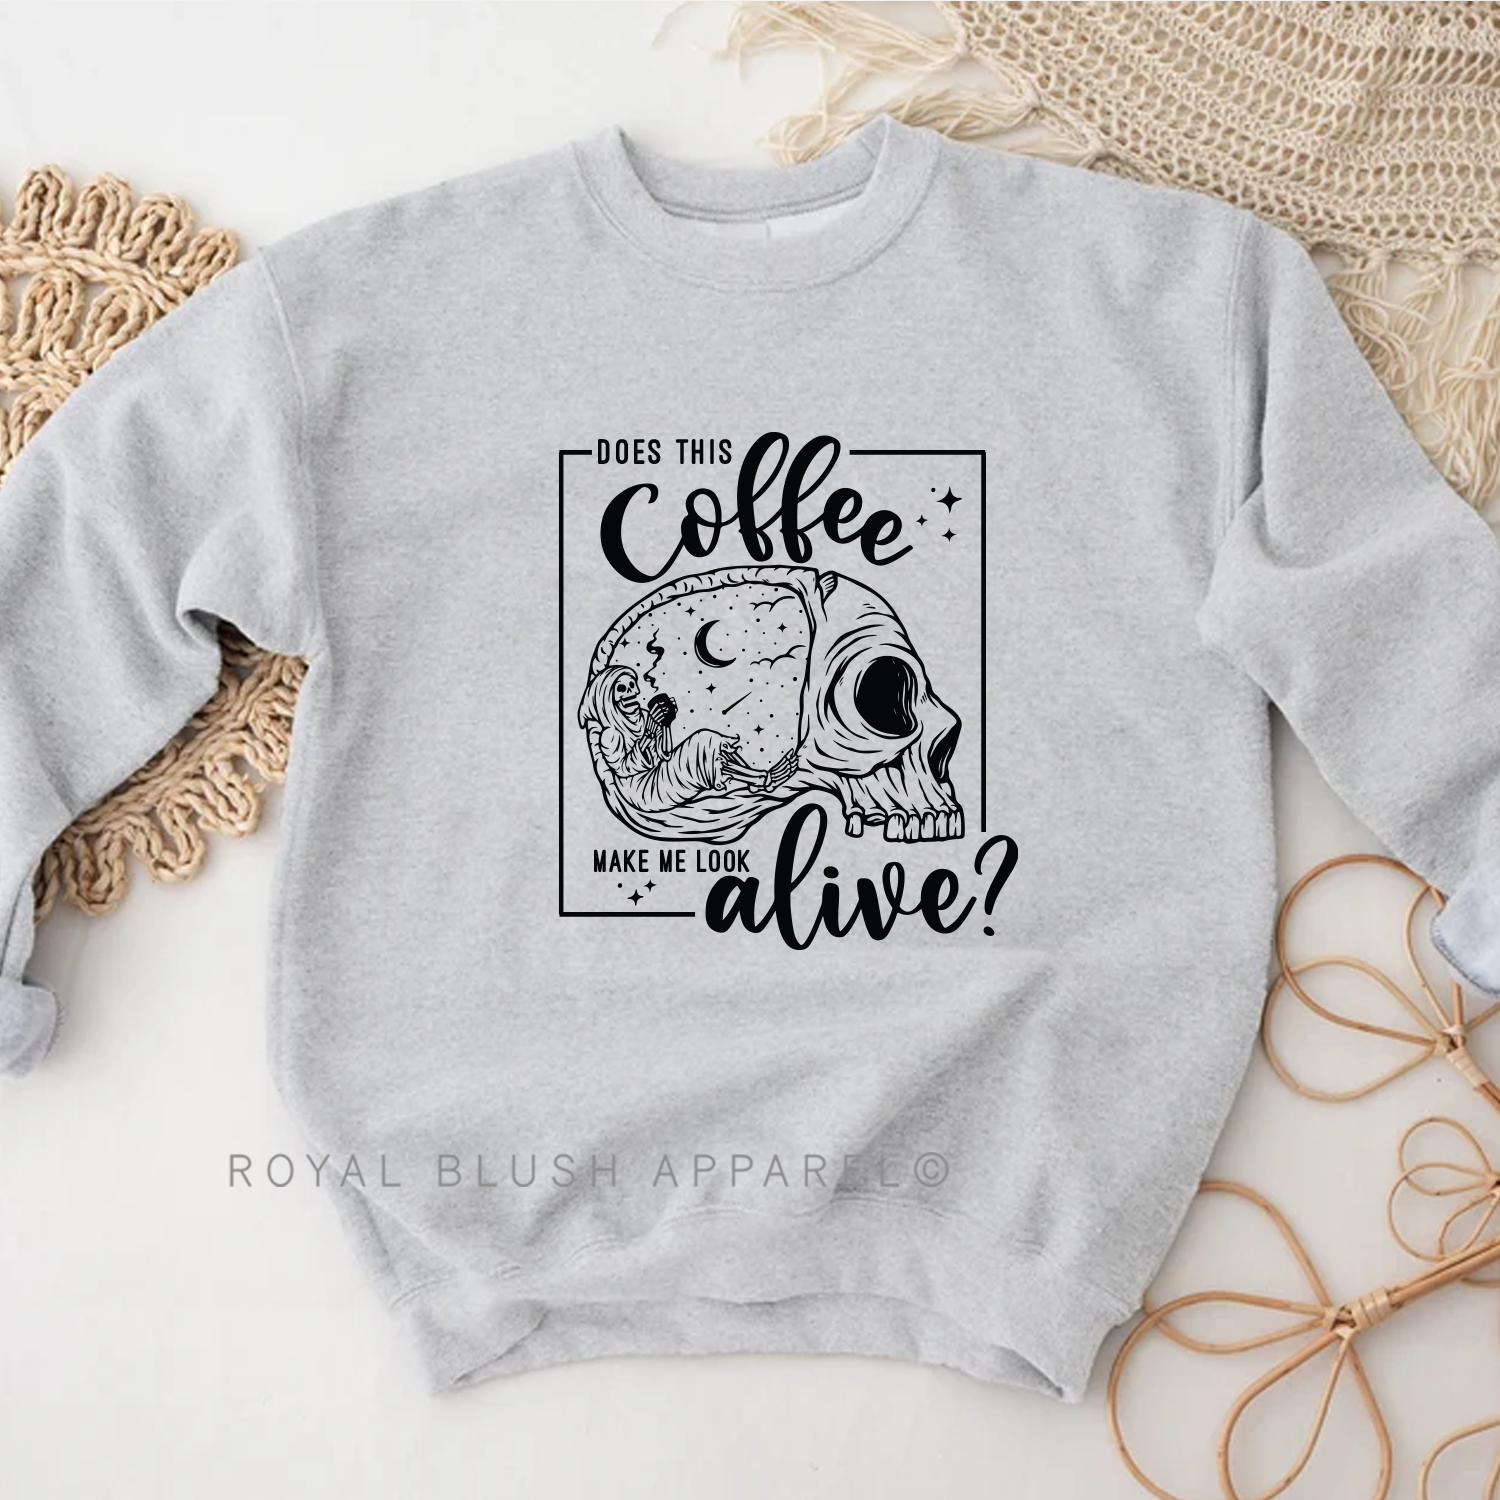 Does This Coffee Make Me Look Alive? Sweatshirt